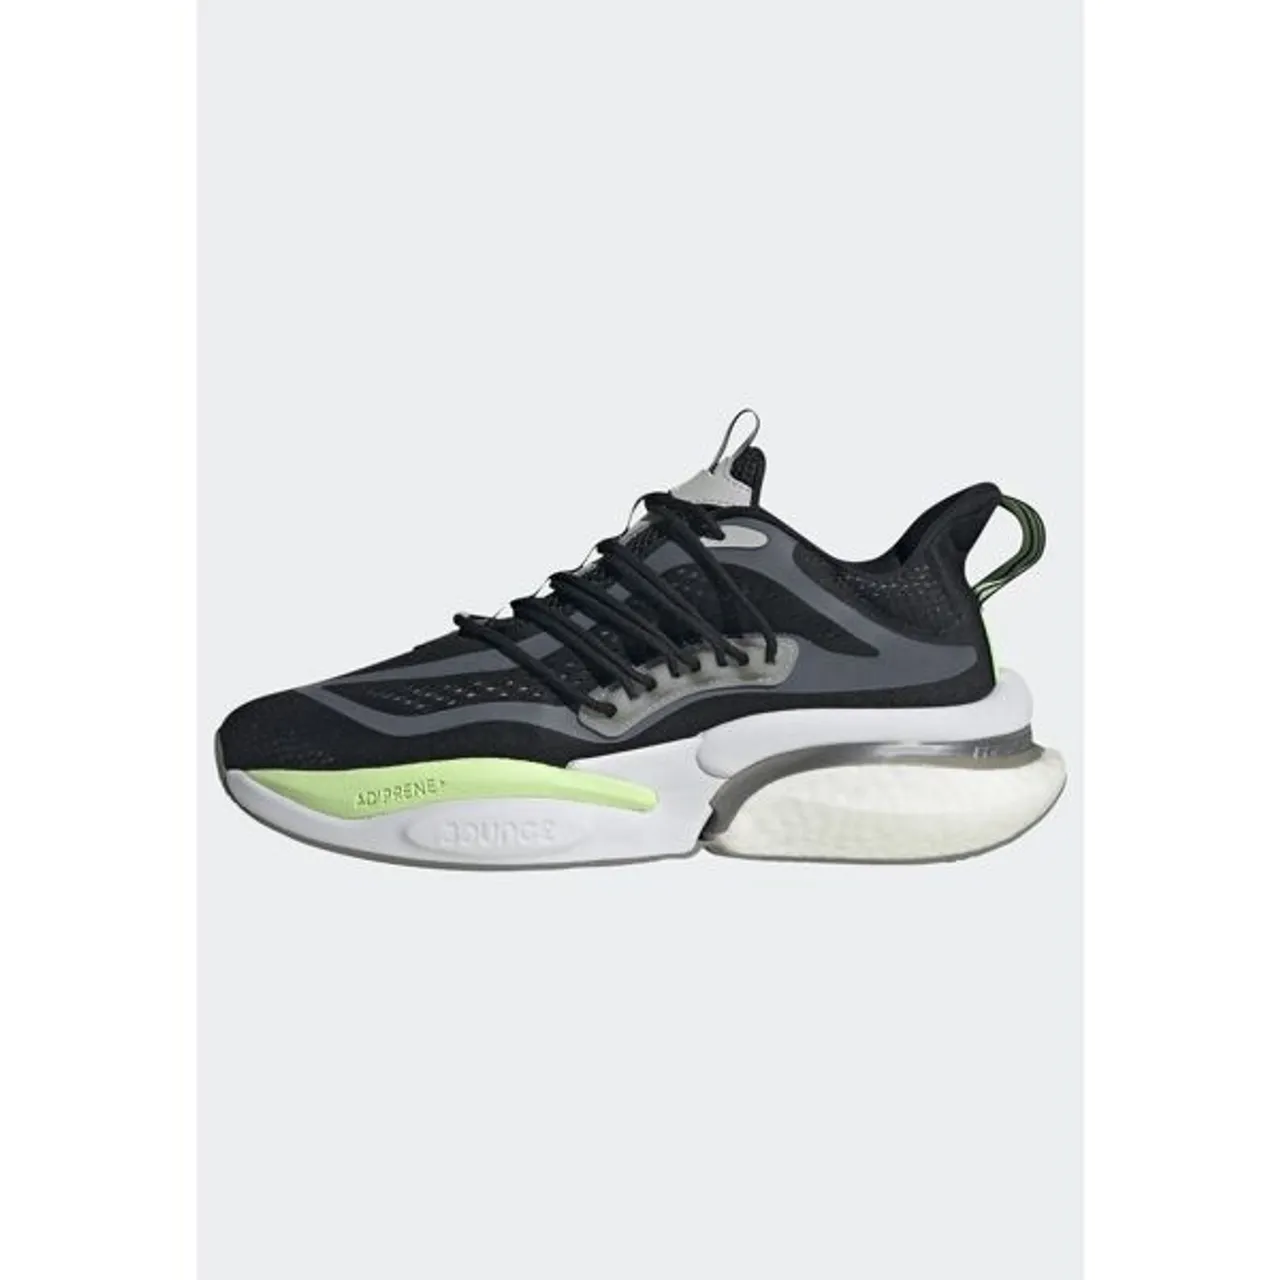 Sneaker ADIDAS SPORTSWEAR "ALPHABOOST V1" Gr. 46, core black, ch solid grey, green spark Schuhe Sportschuhe